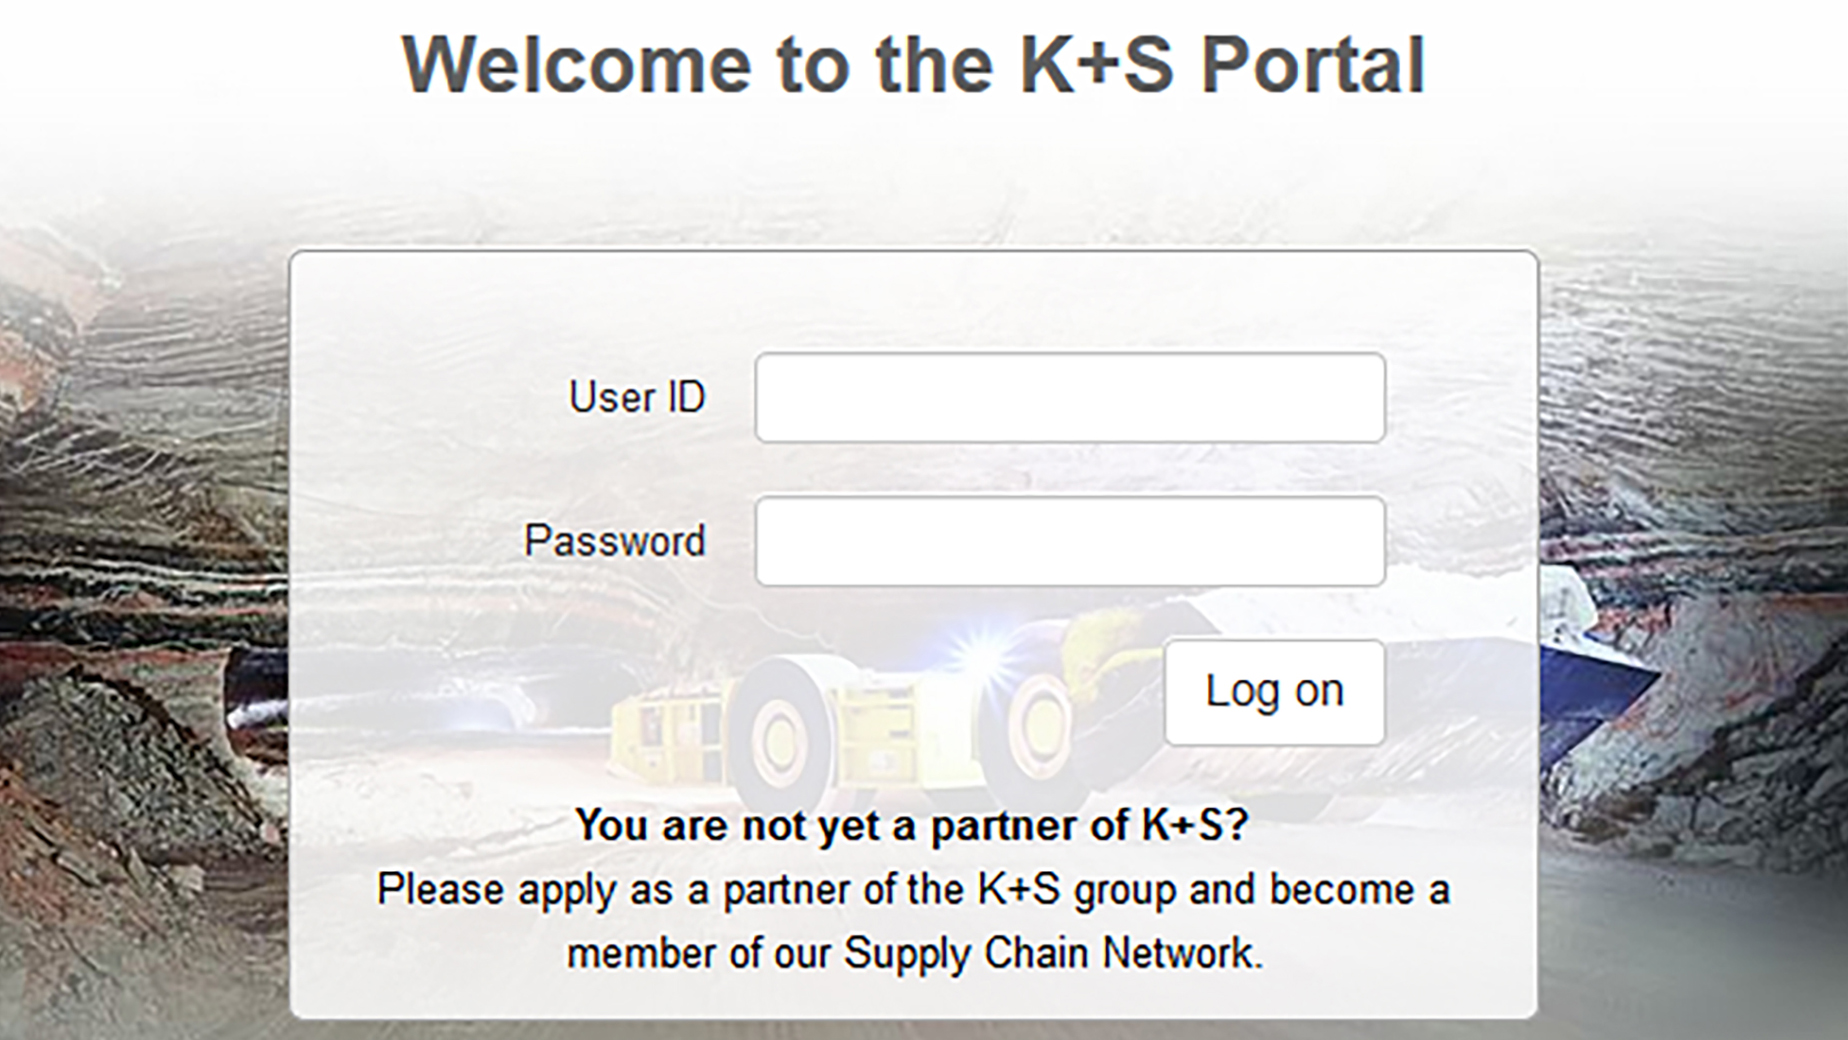 Supply Chain Portal